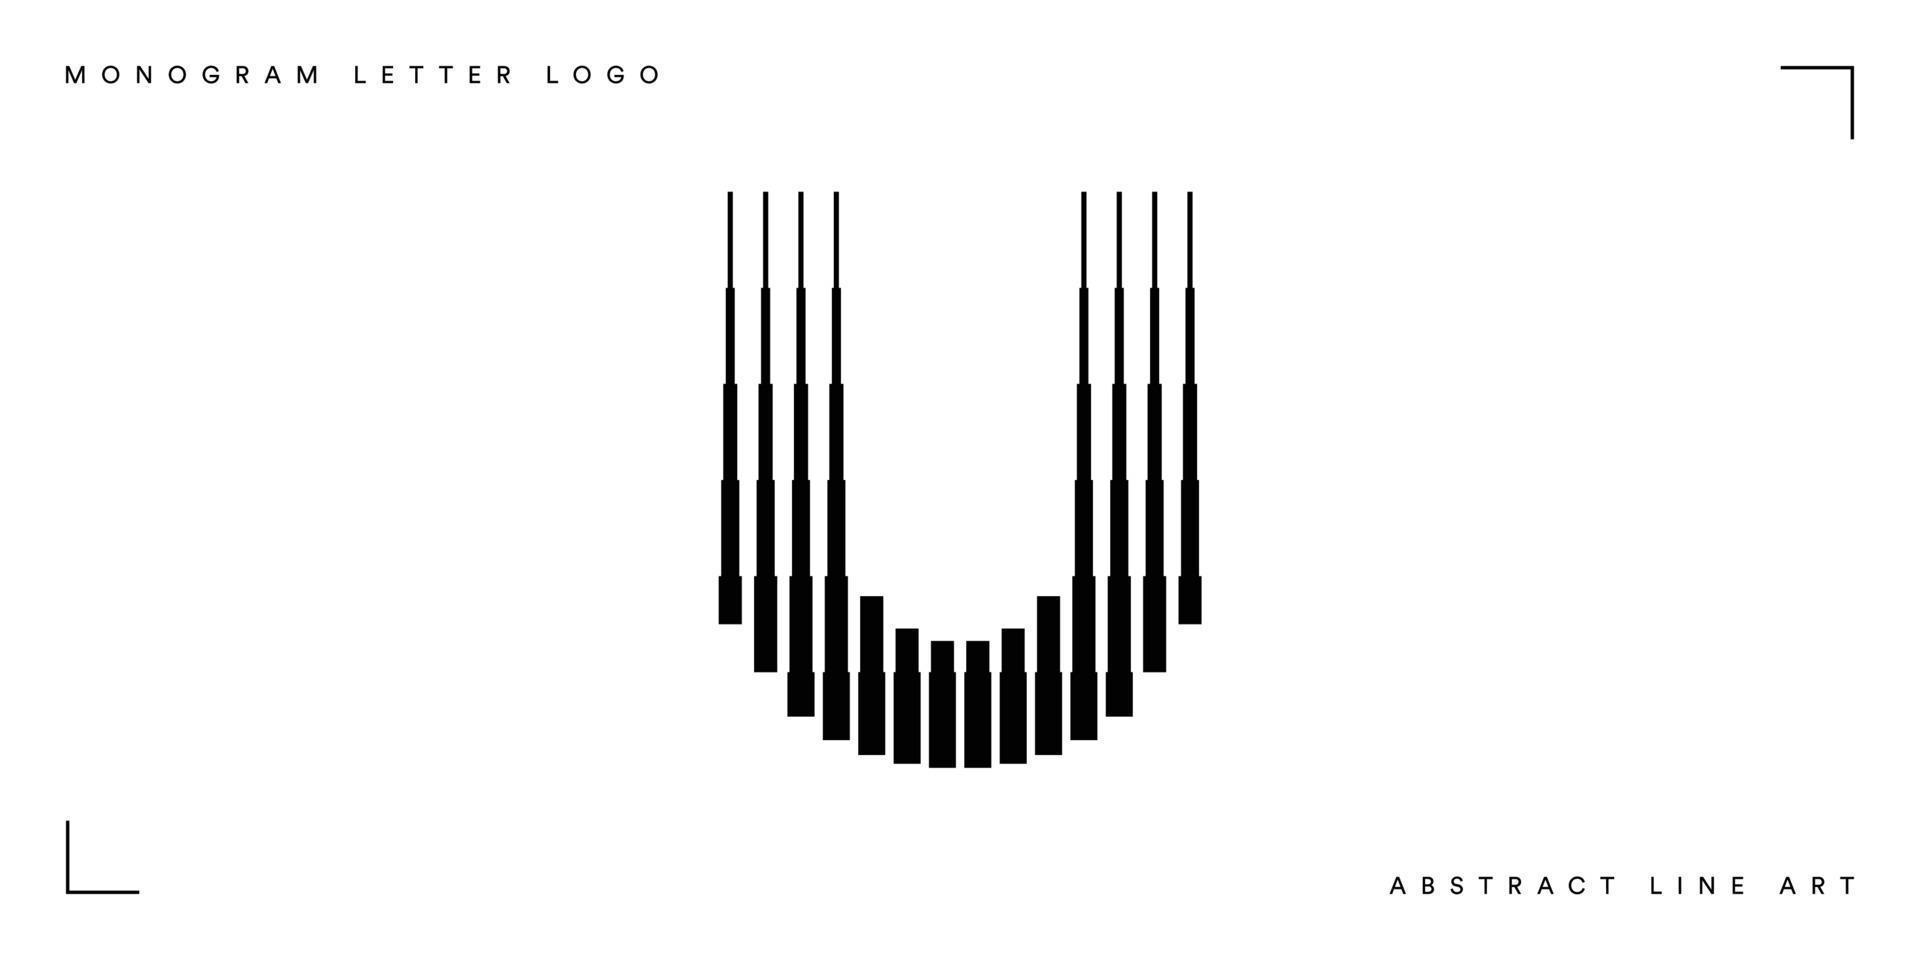 arte de linha abstrata letra u logotipo do monograma vetor